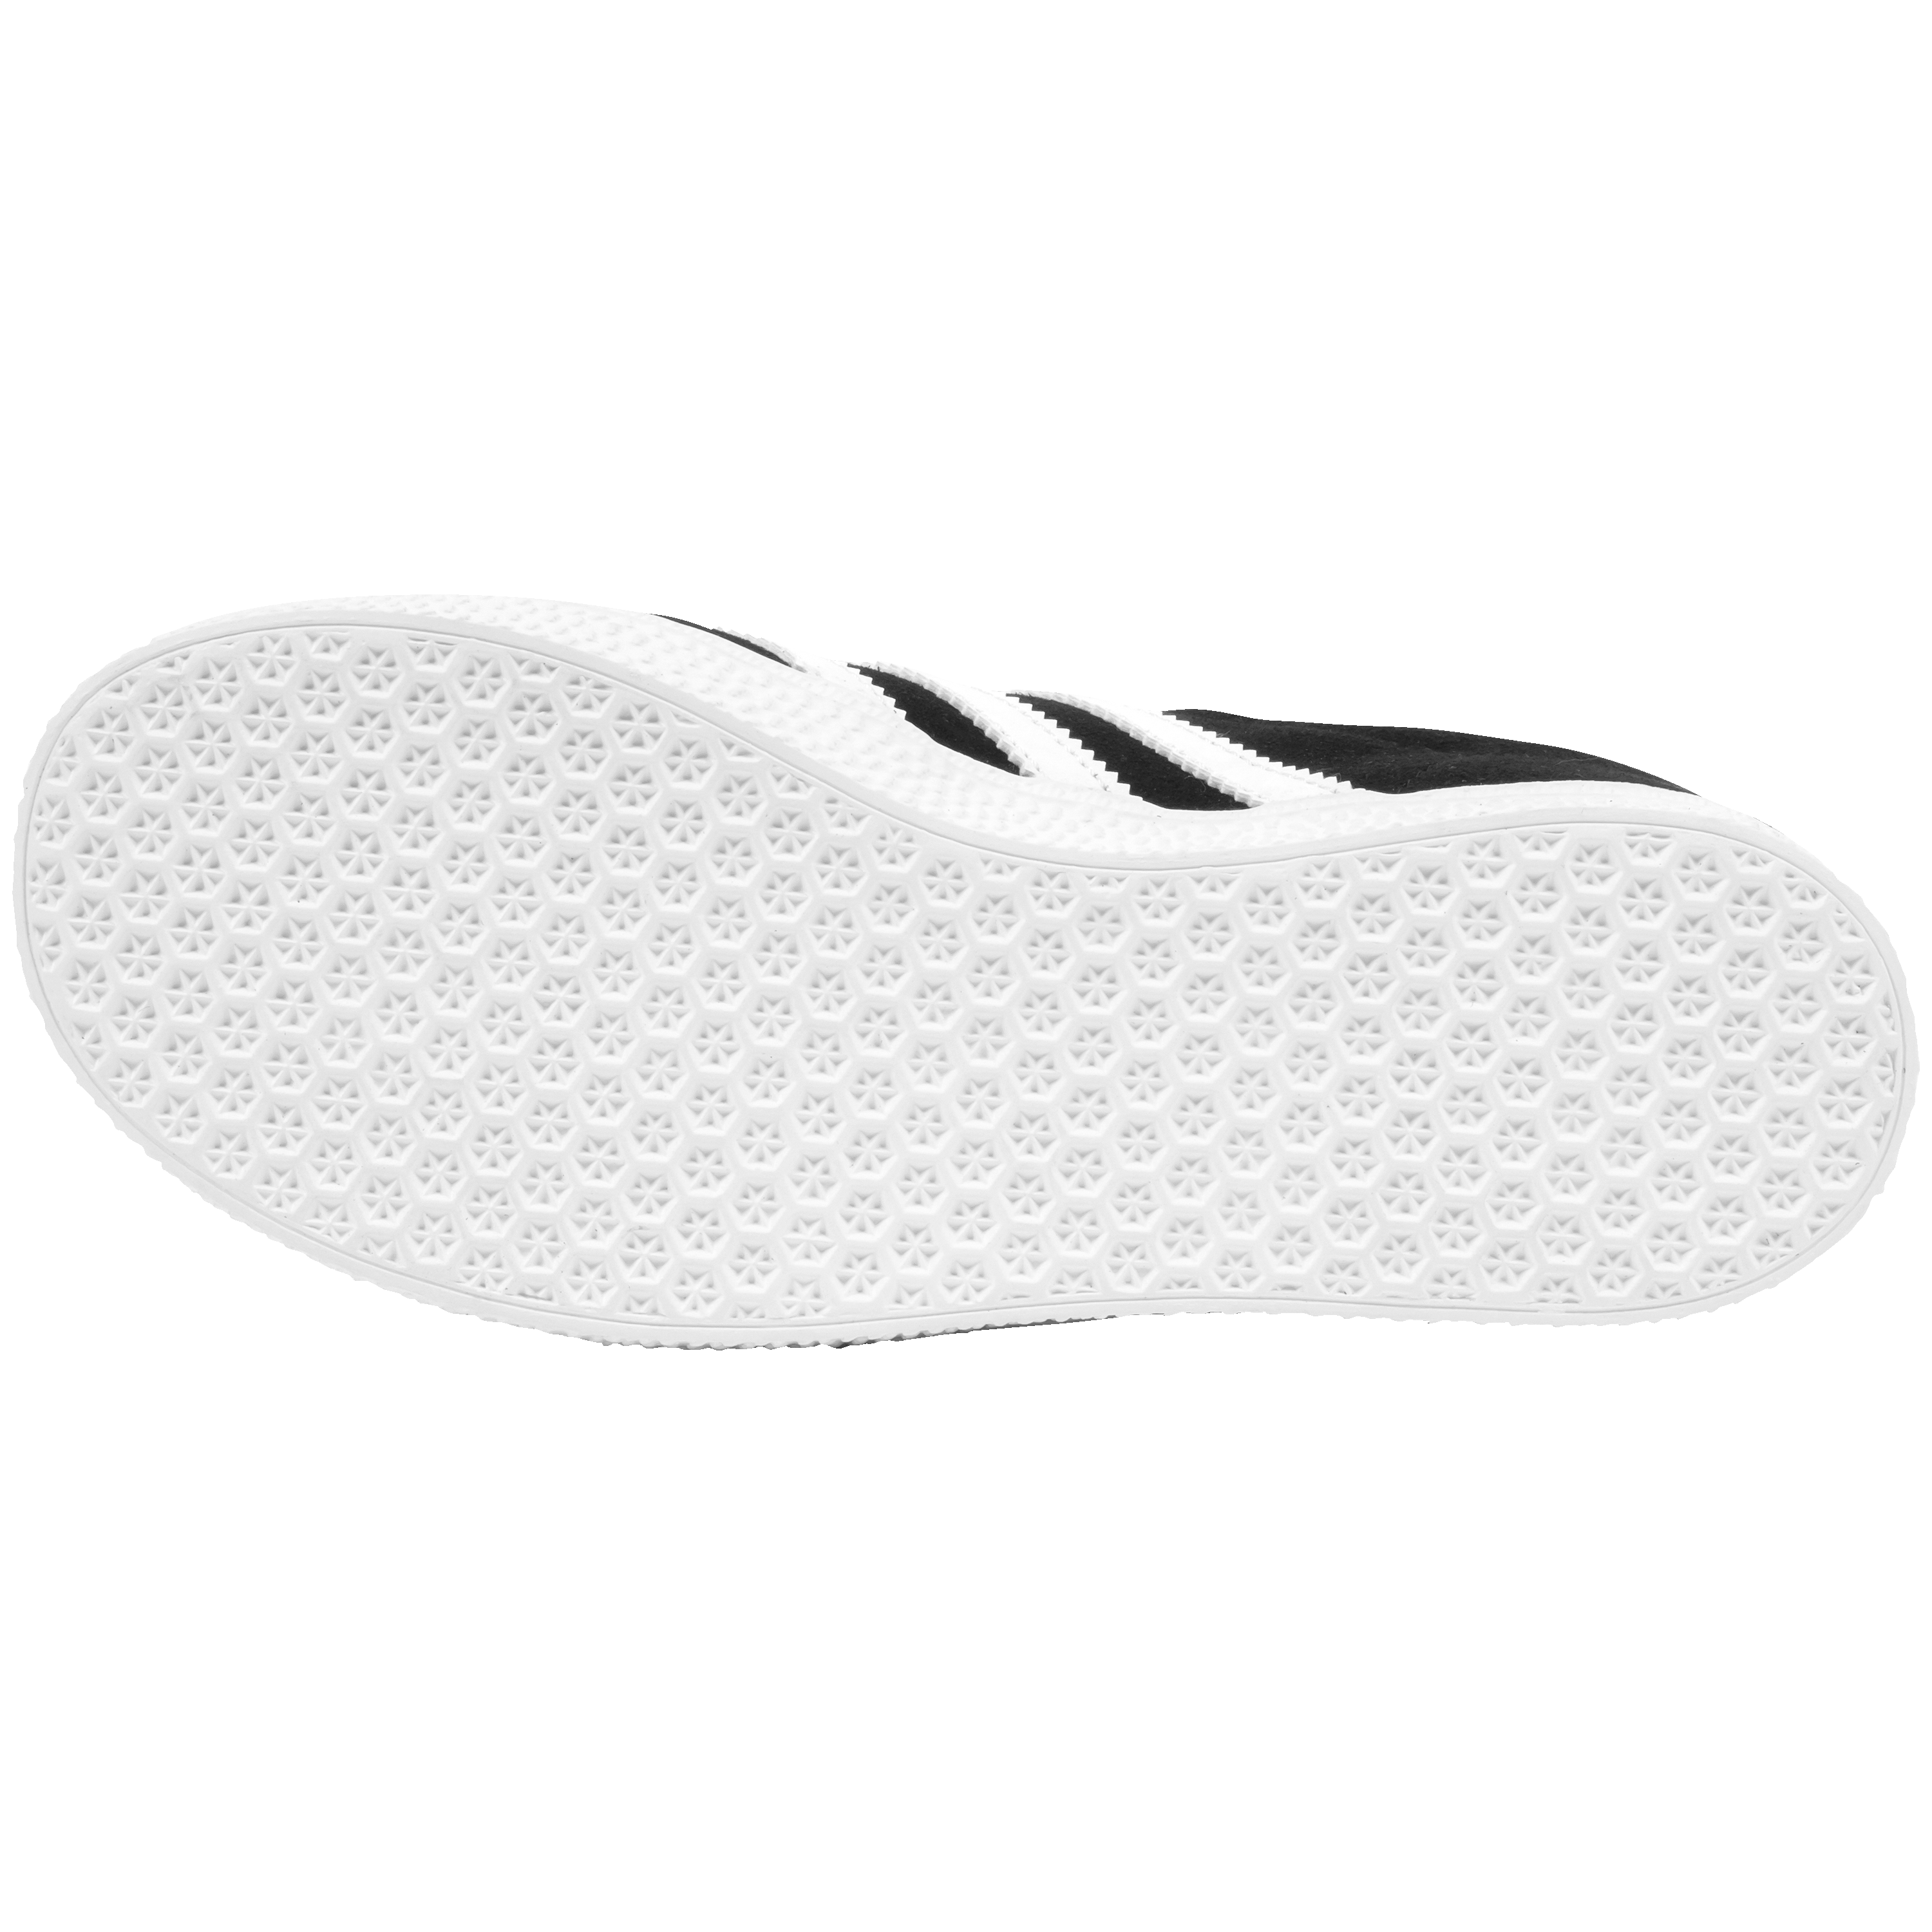 adidas gazelle foot locker